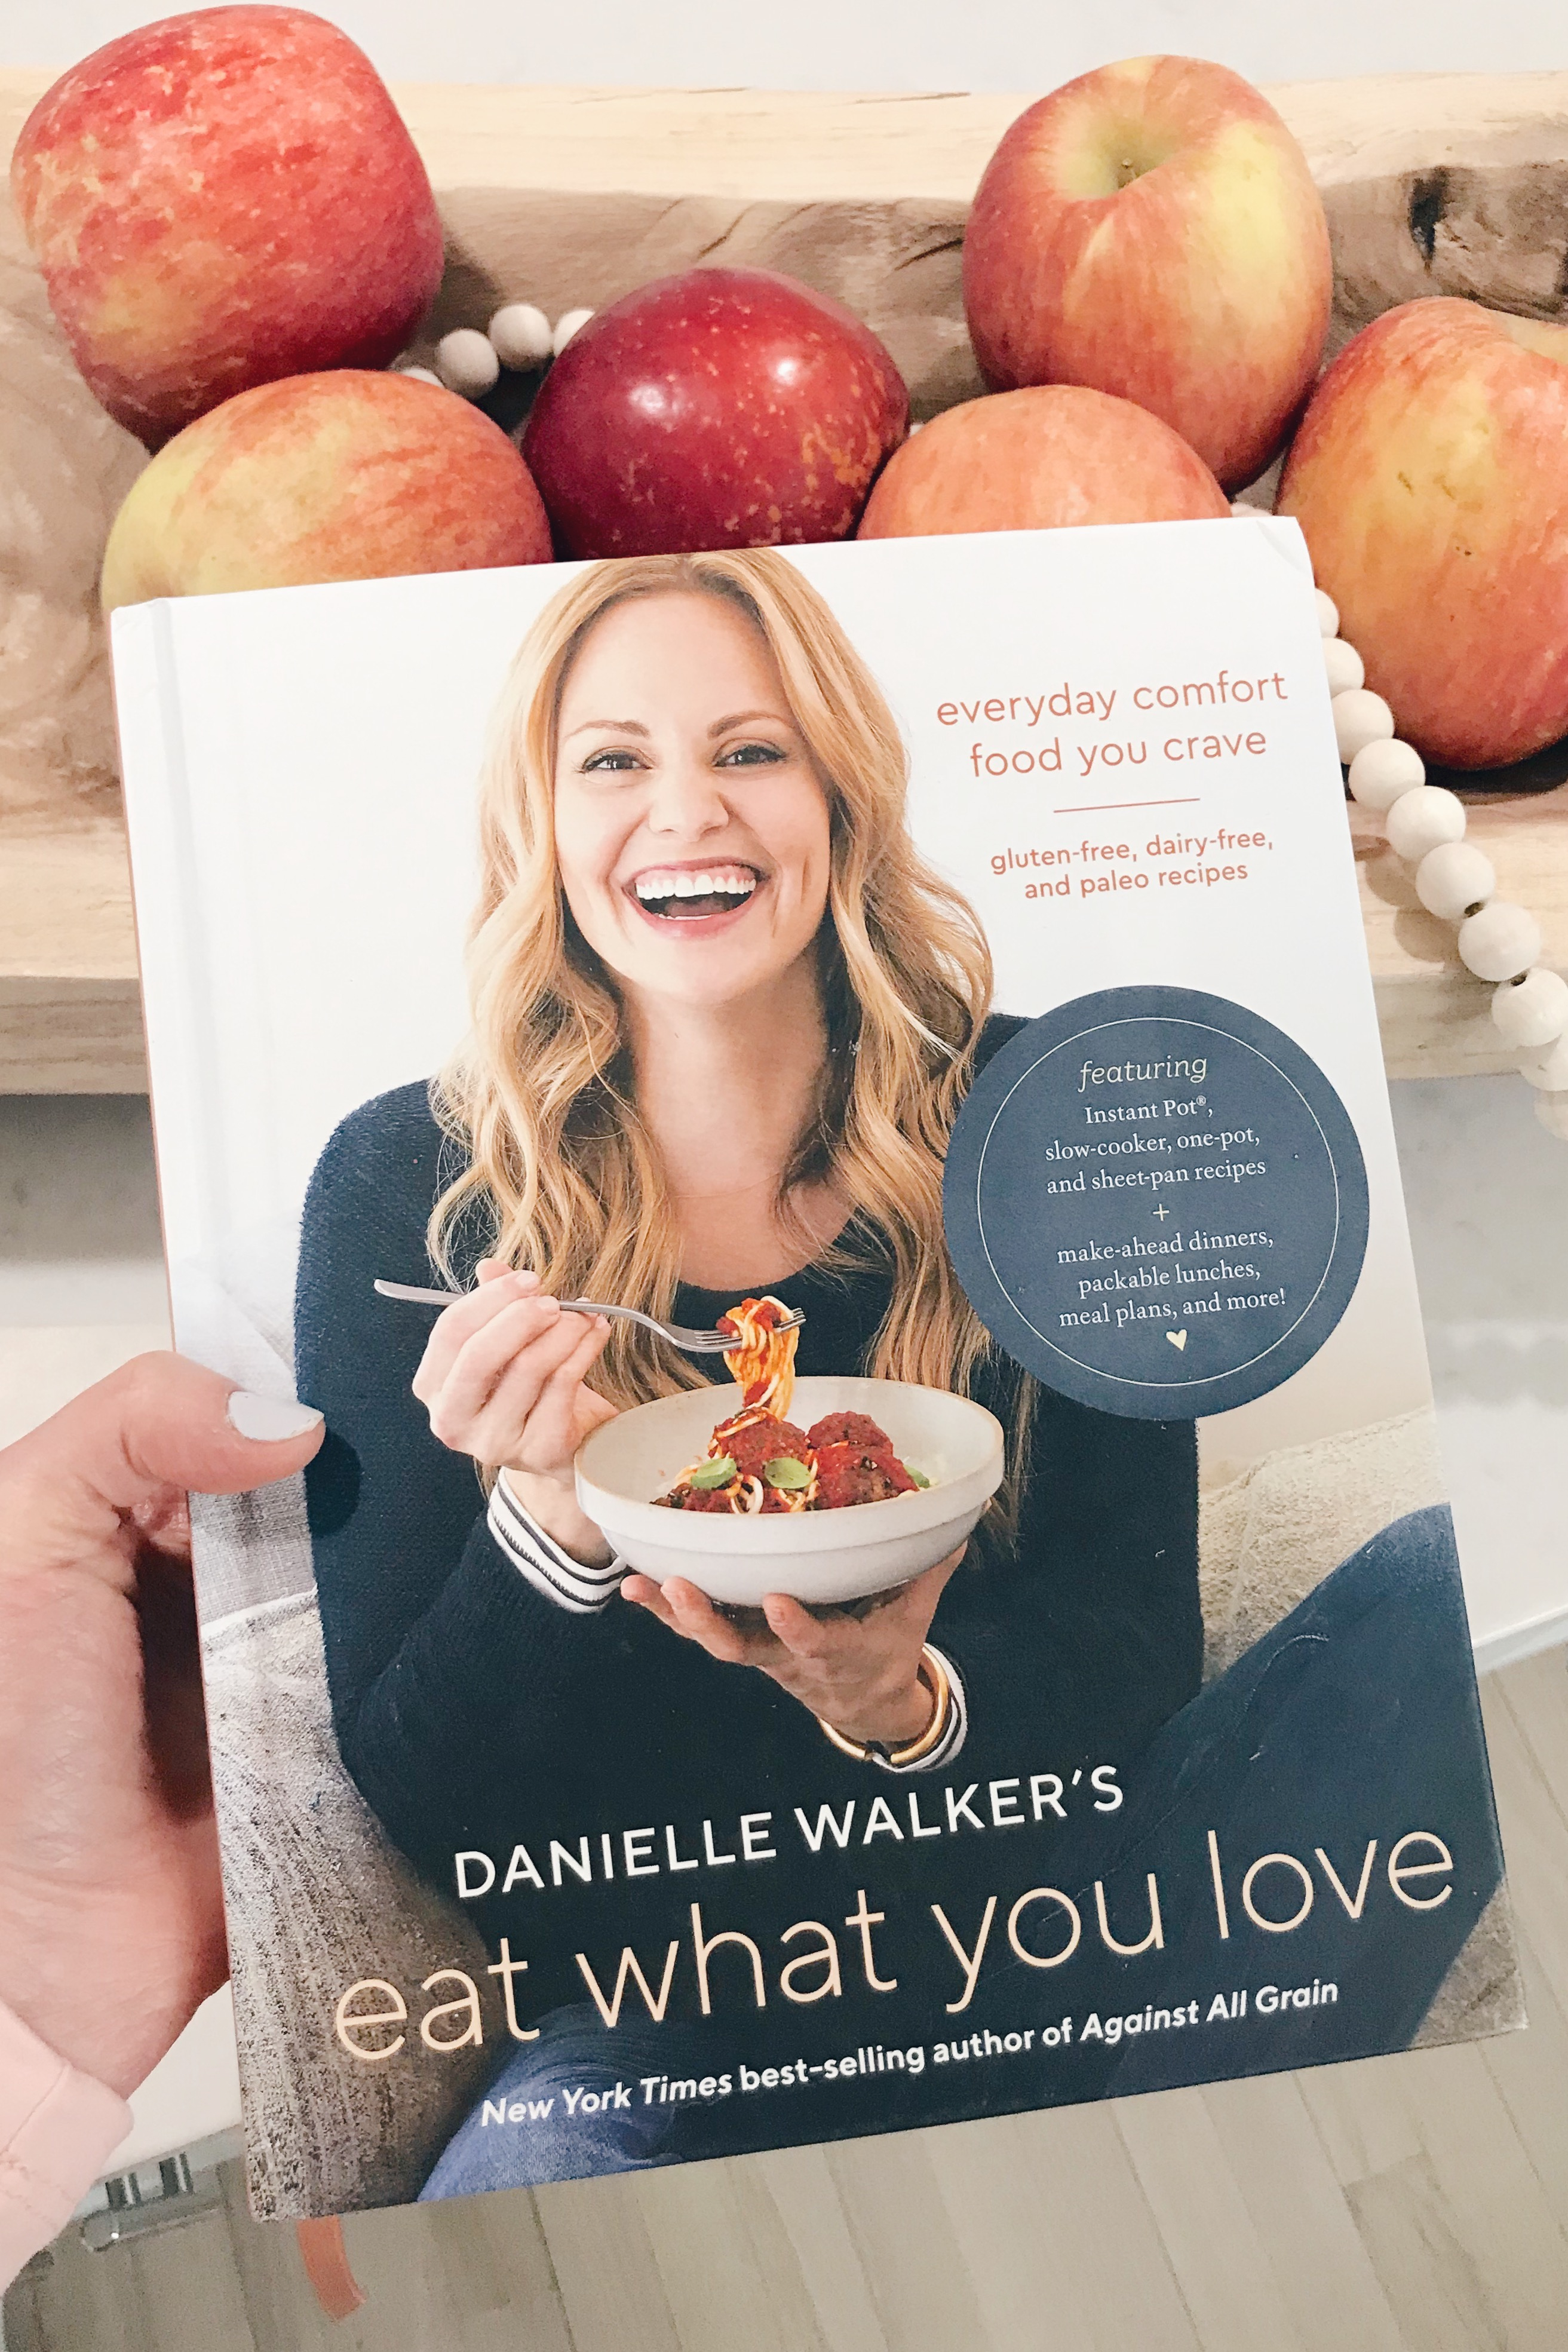  healthy dinner recipes on pinteresting plans blog - danielle walker's book - favorite recipes